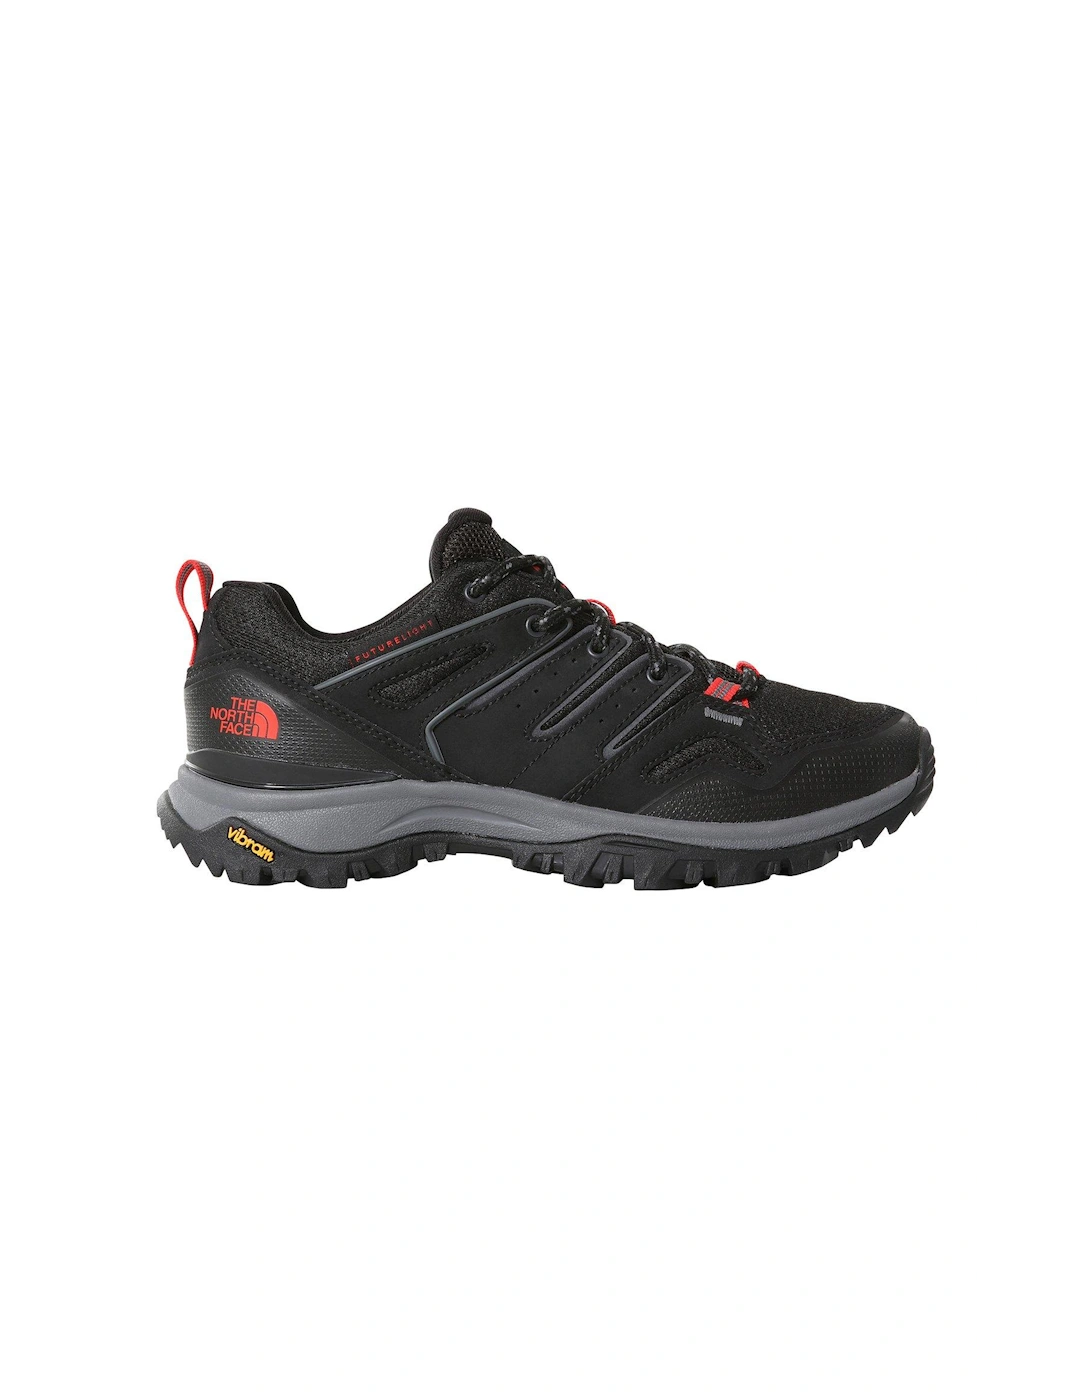 Women's Hedgehog Futurelight Hiking Shoes - Black/Red, 7 of 6